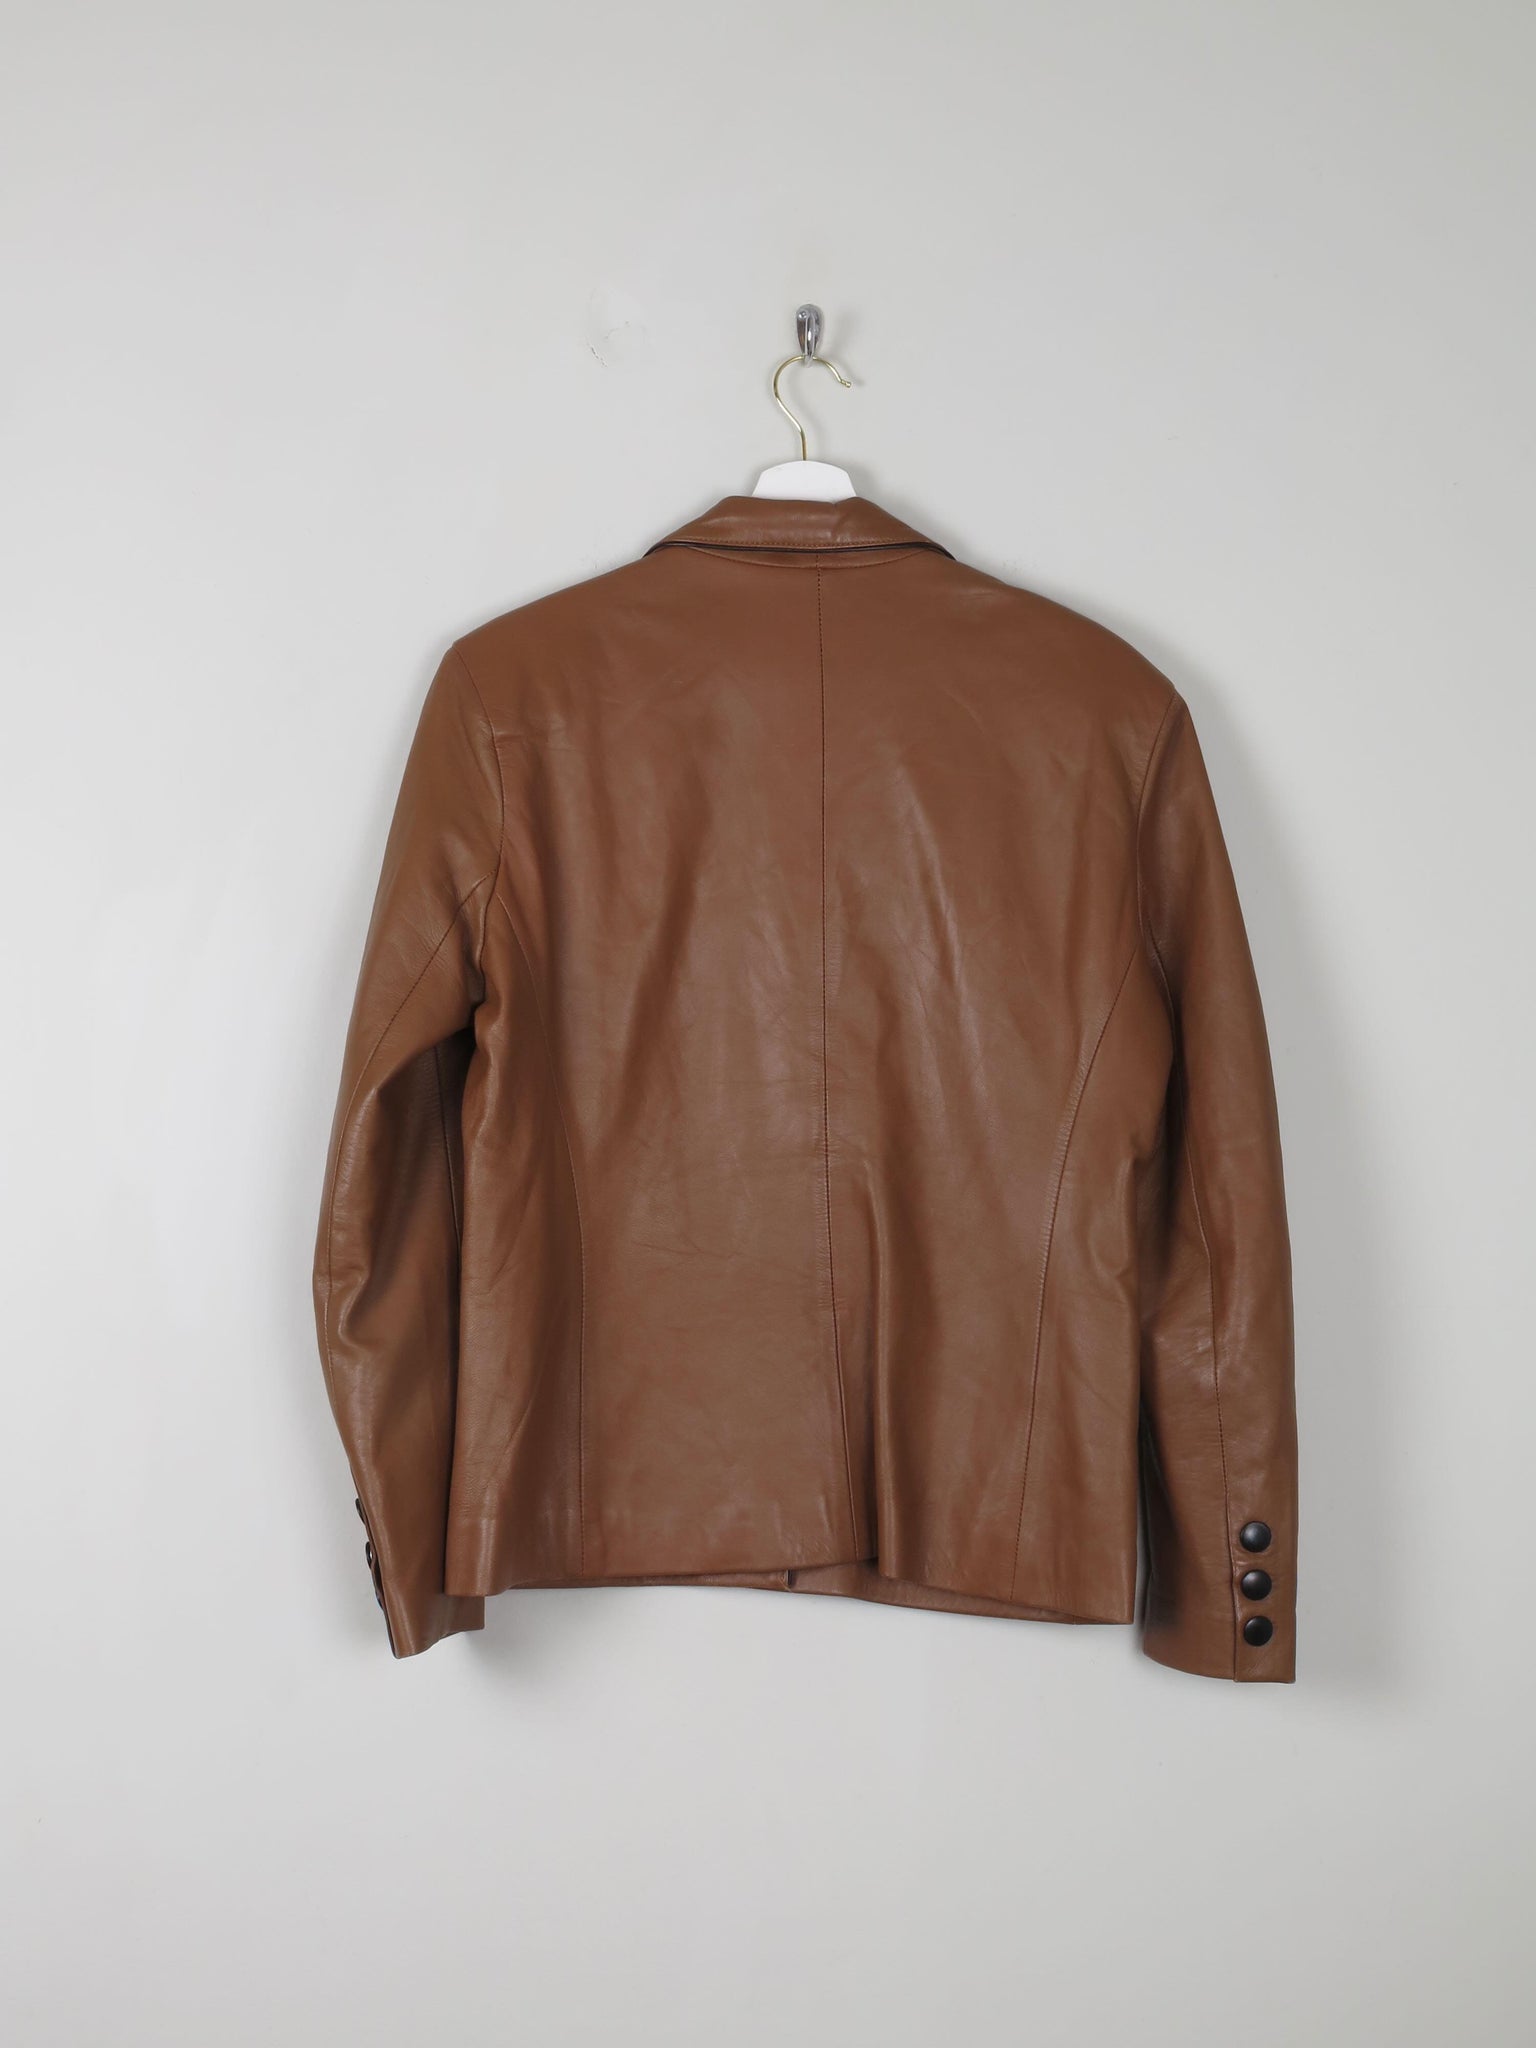 Women's Vintage Tan Leather Jacket L - The Harlequin